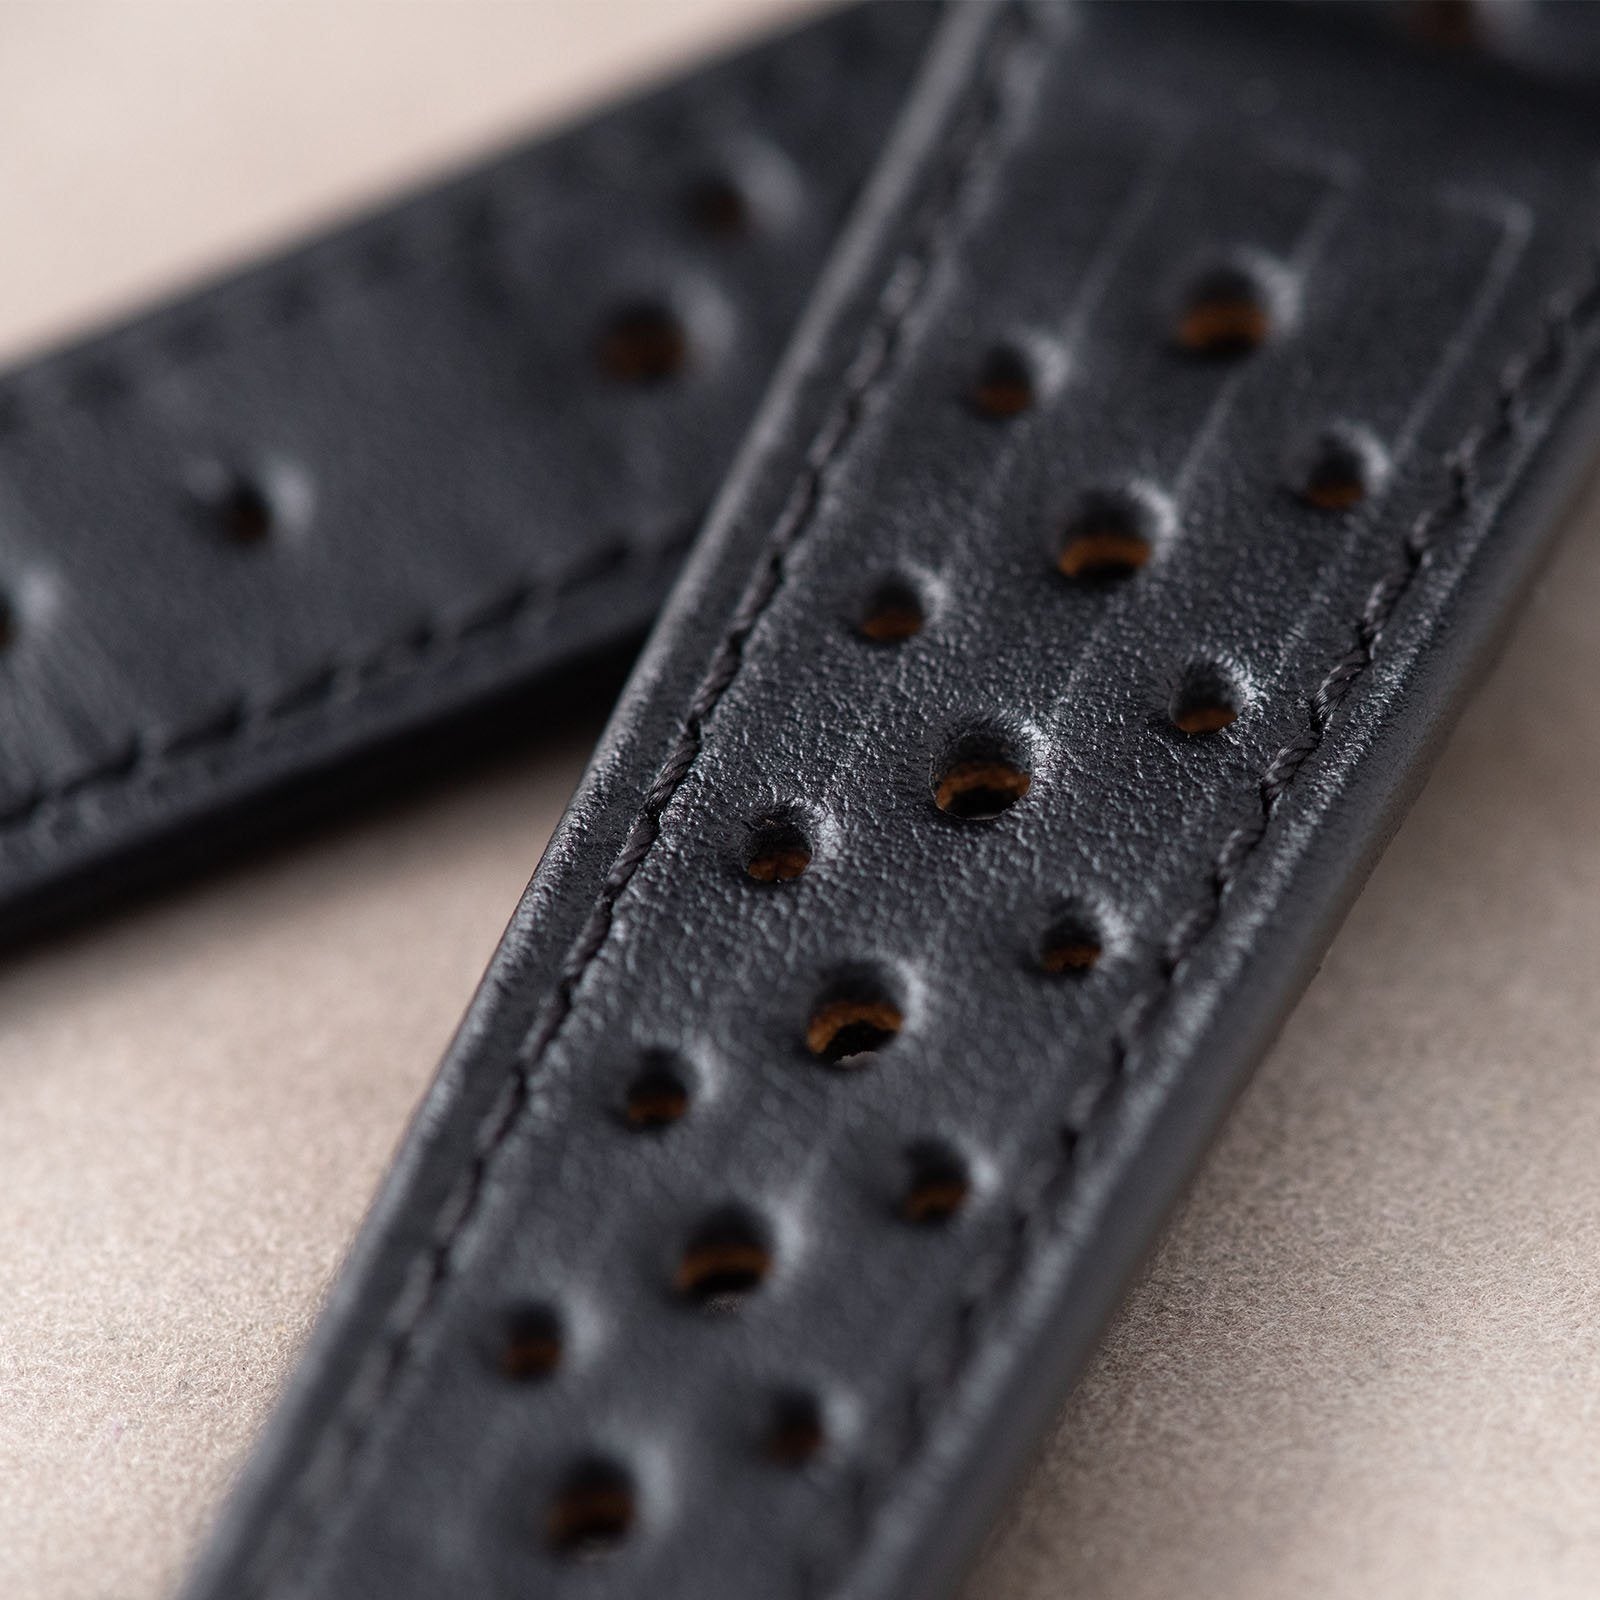 Racing Black Speedy Leather Watch Strap